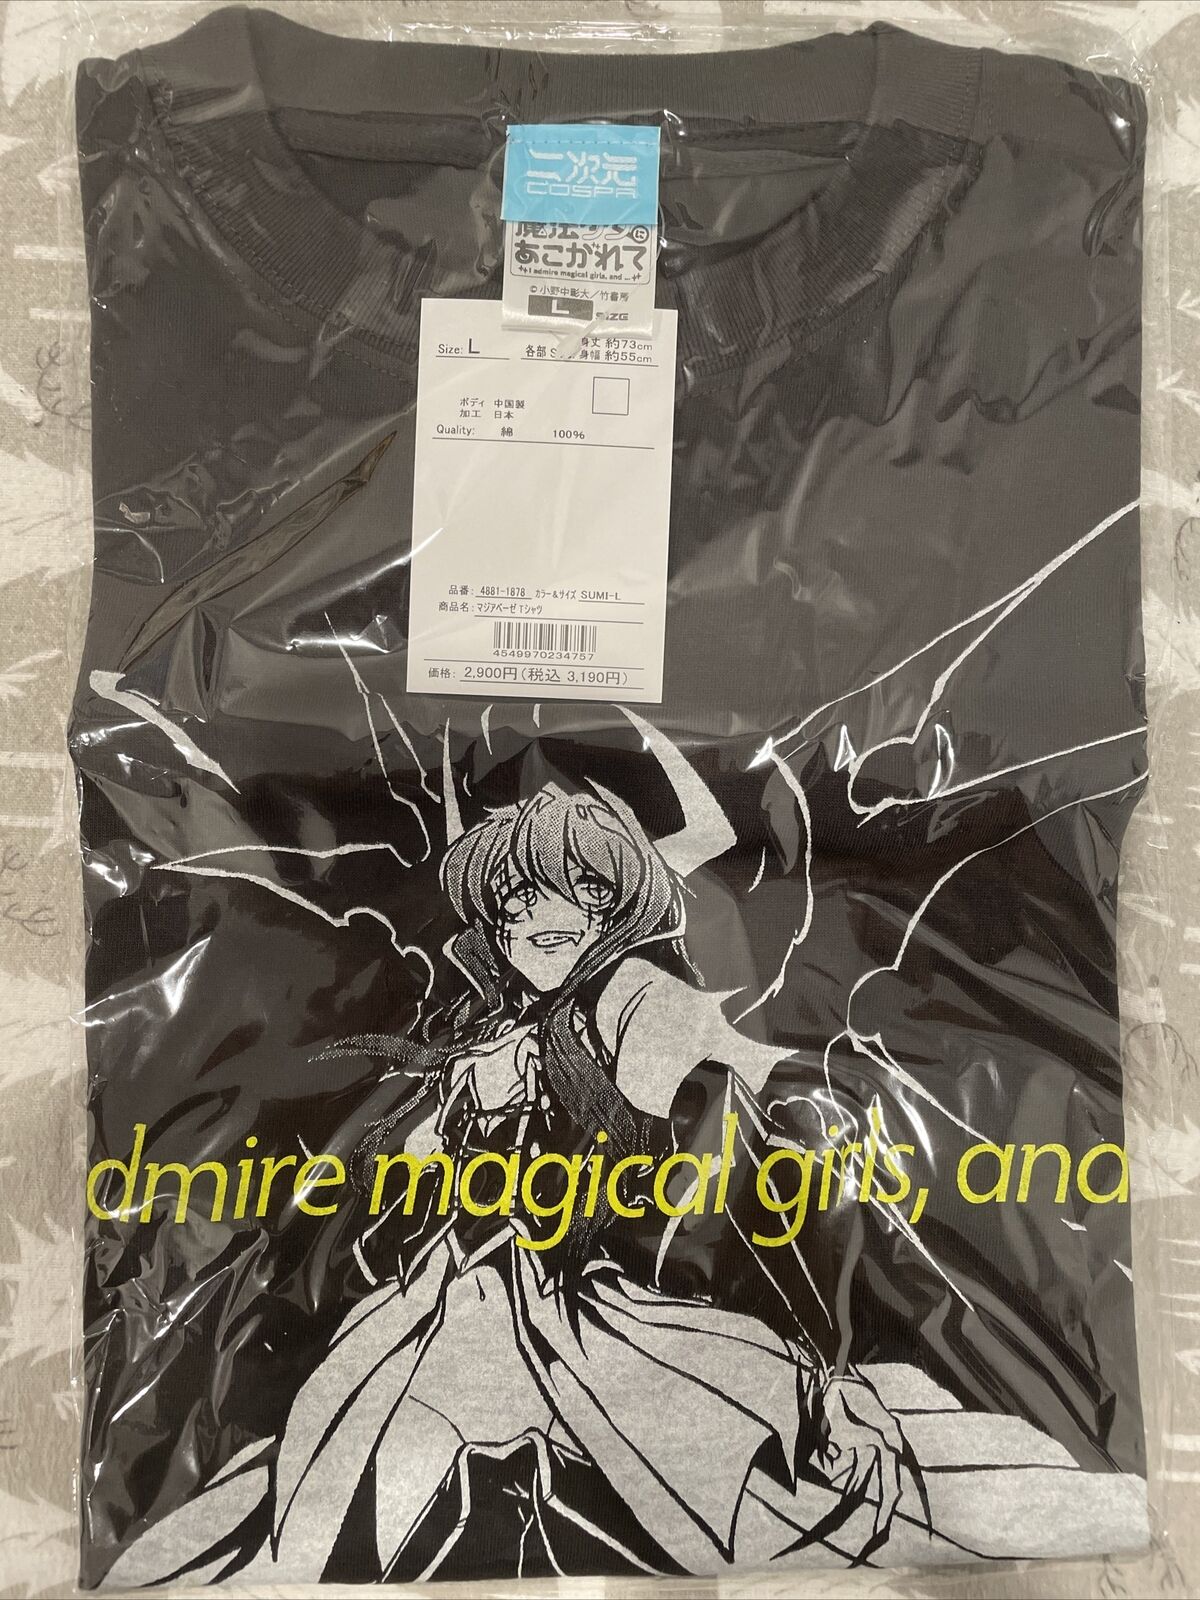 Gushing over Magical Girls Magia Baiser T-shirt /SUMI-L